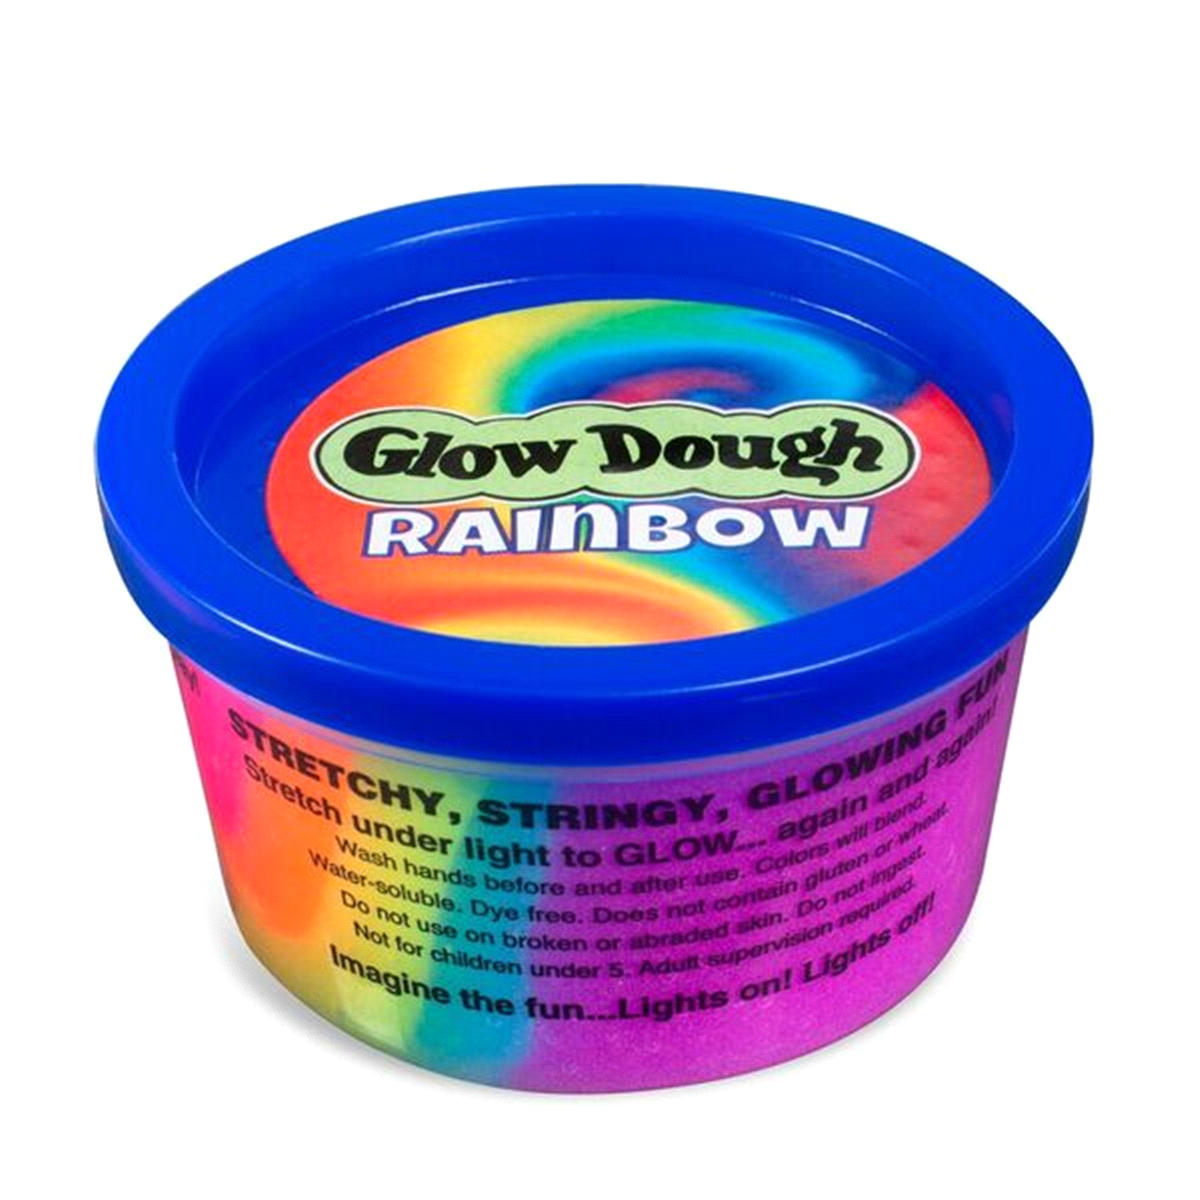 Rainbow Glow Dough - Teich Toys & Gifts